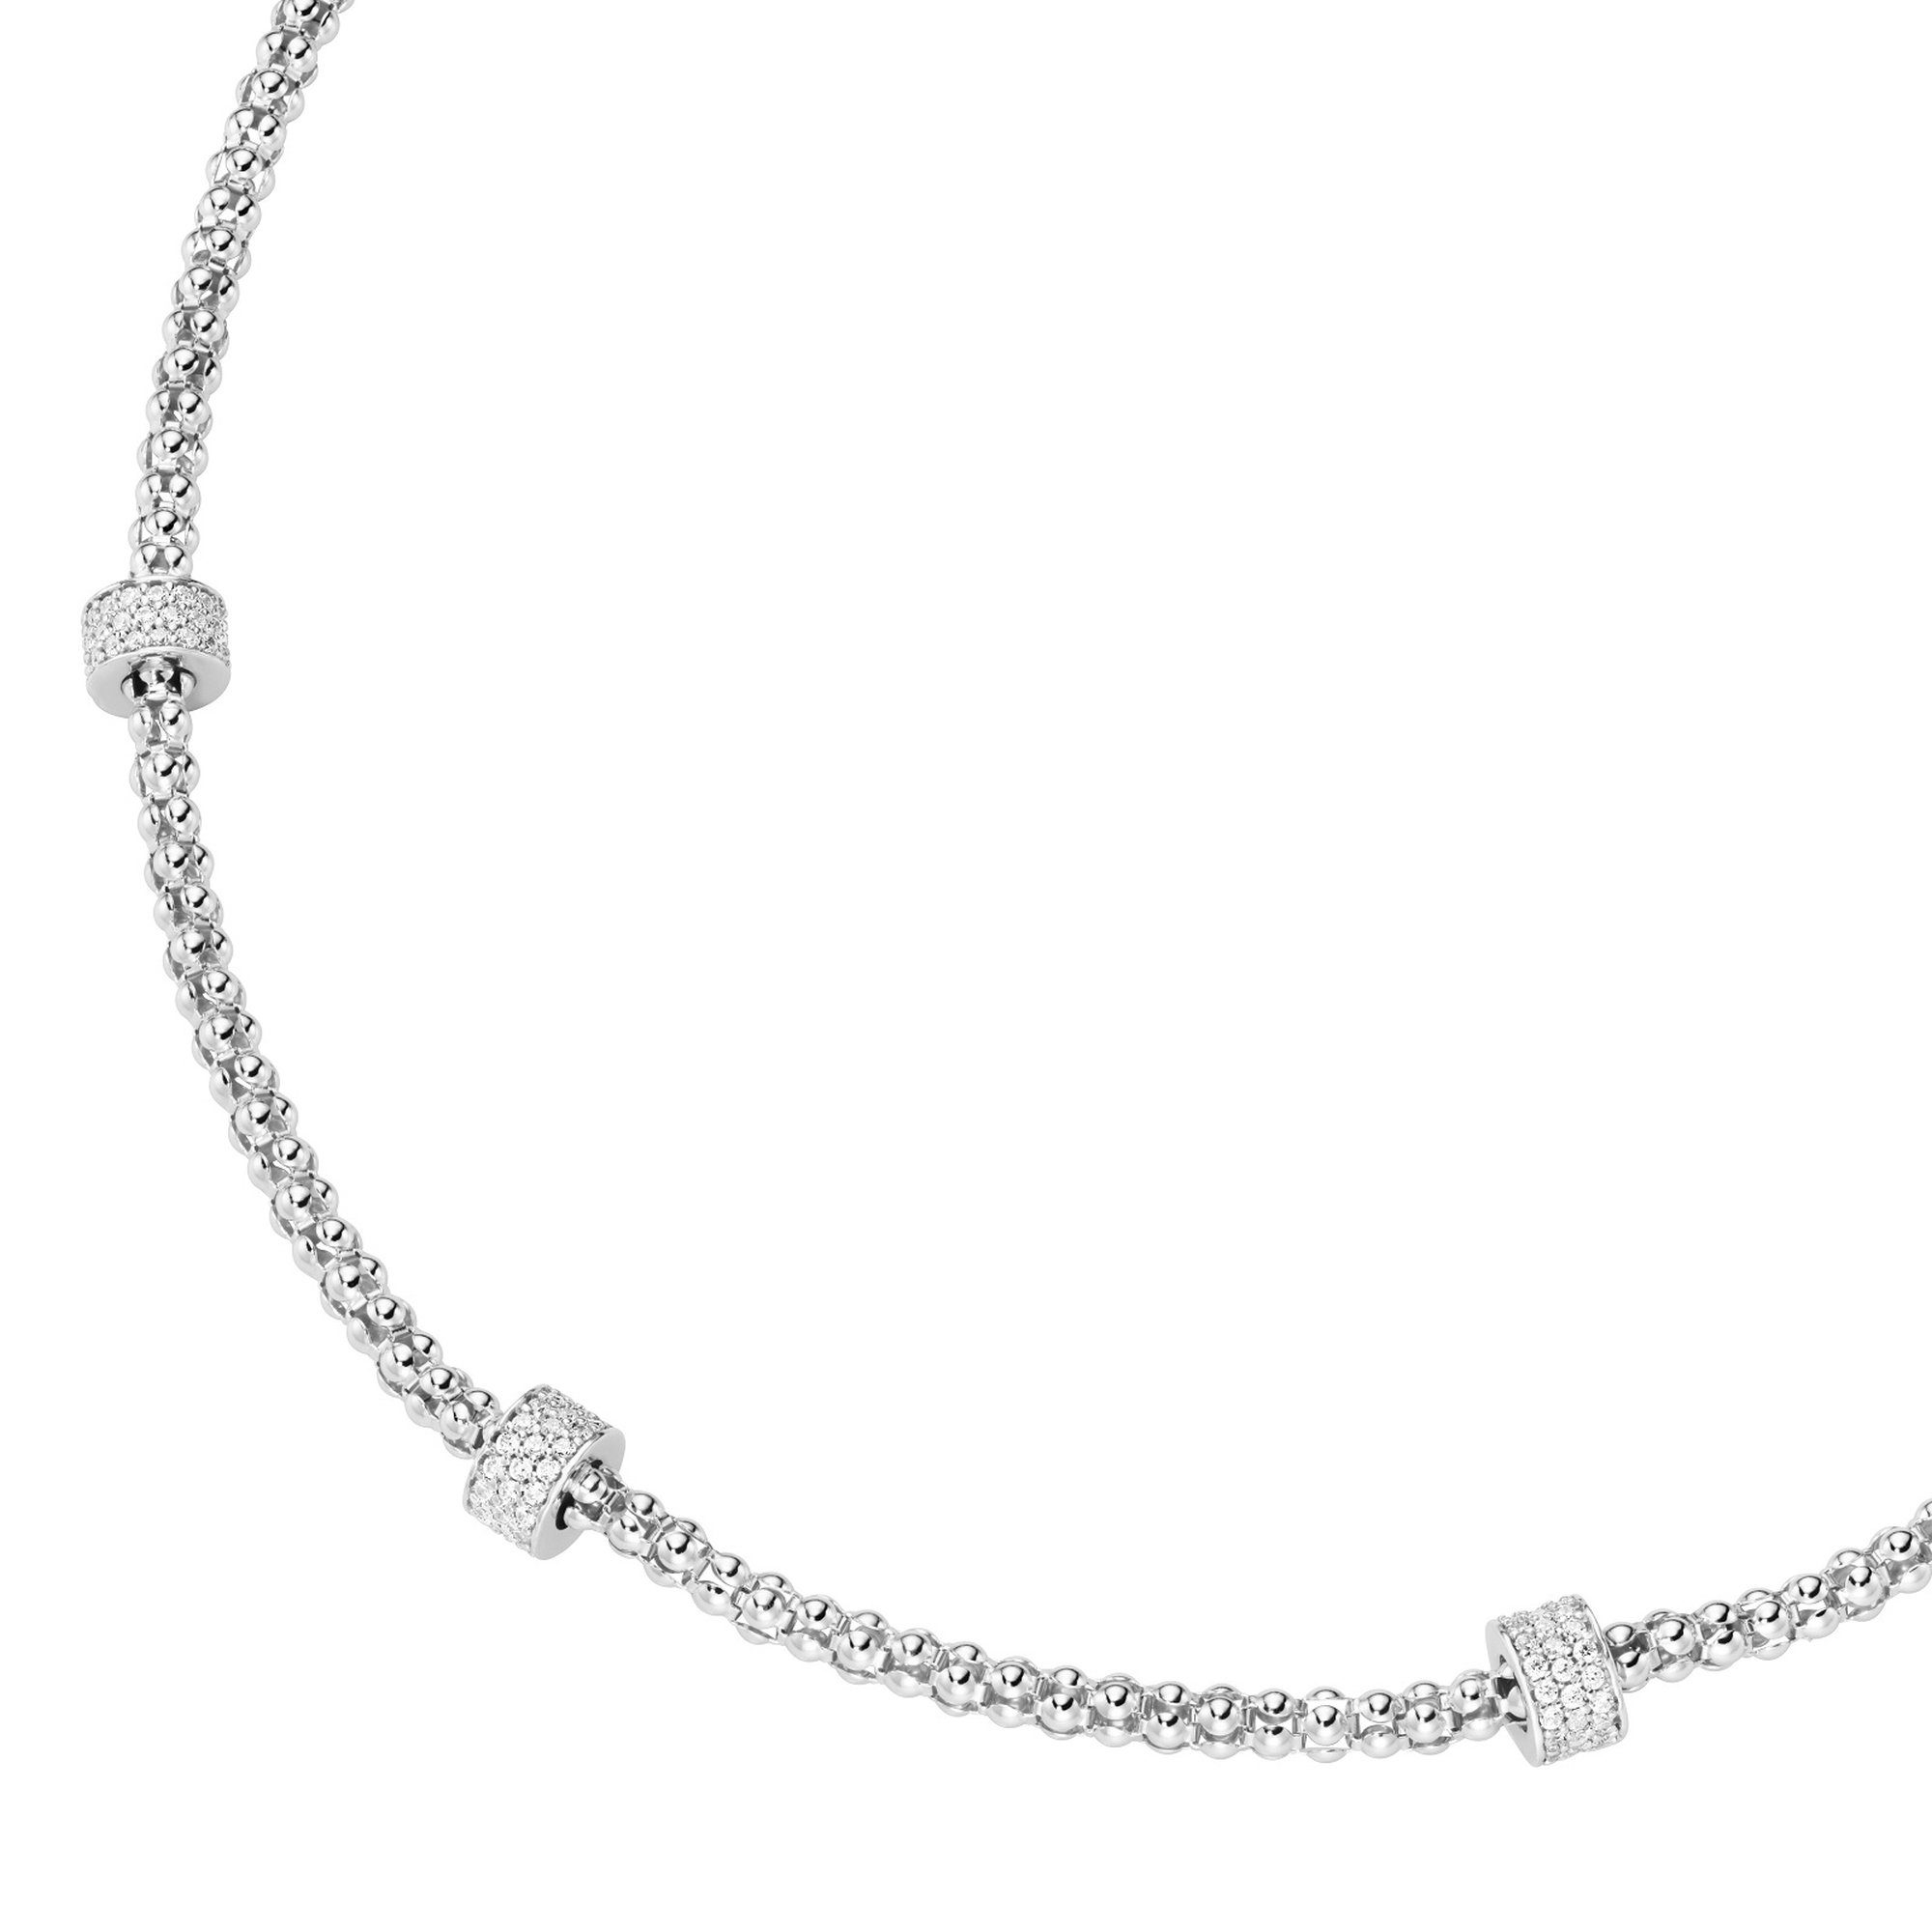 Damen Schmuck Smart Jewel Collier Himbeerkette, Rondelle mit Zirkonia Steinen, Silber 925